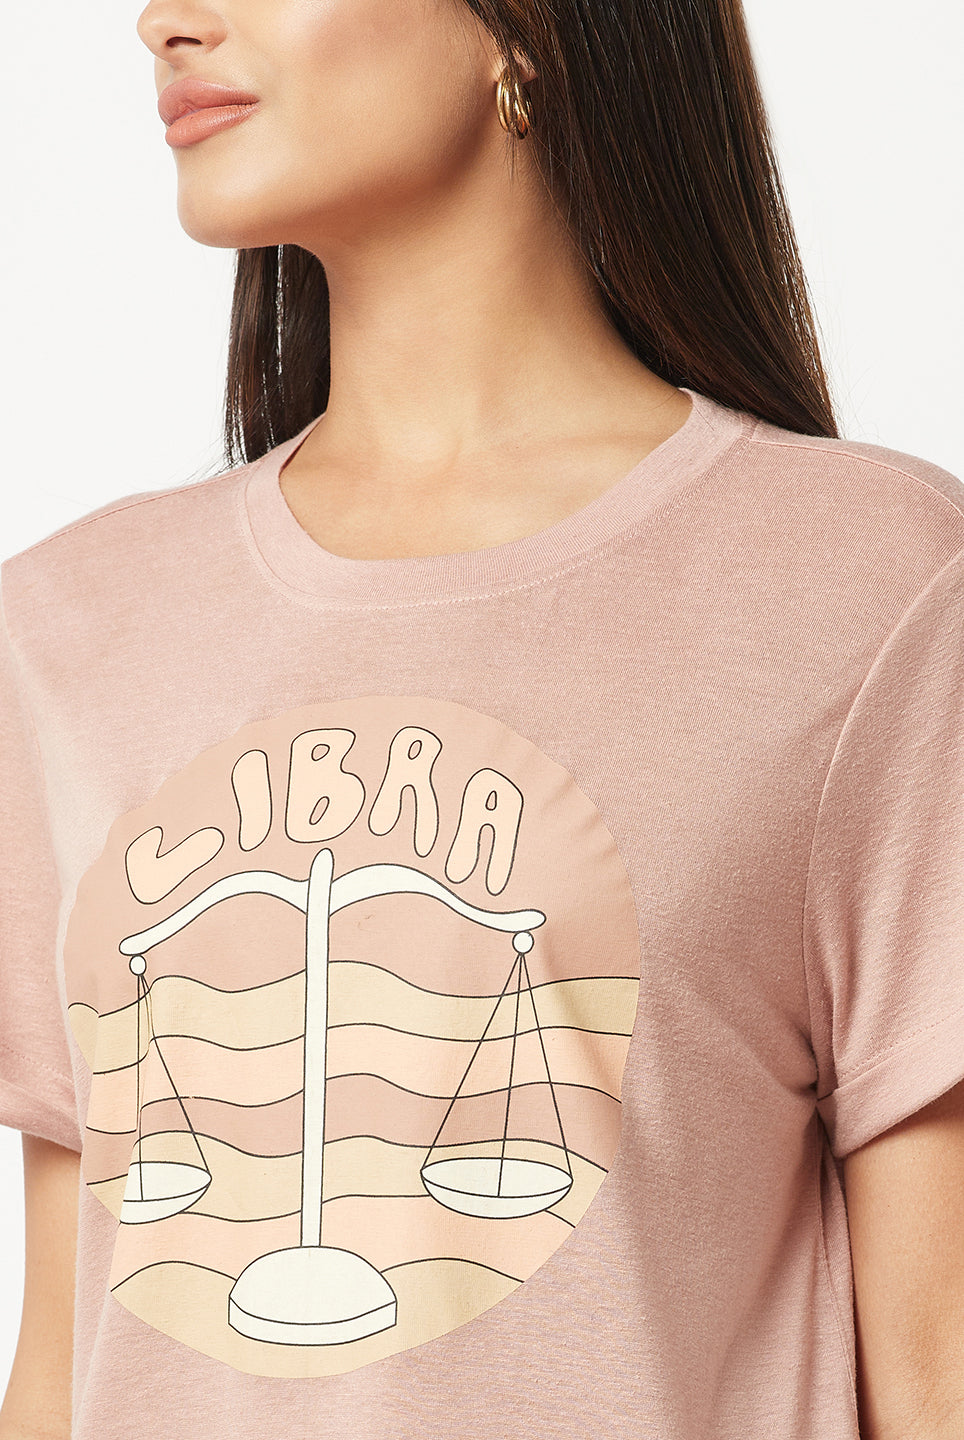 Libra Zodiac Sign T-shirt